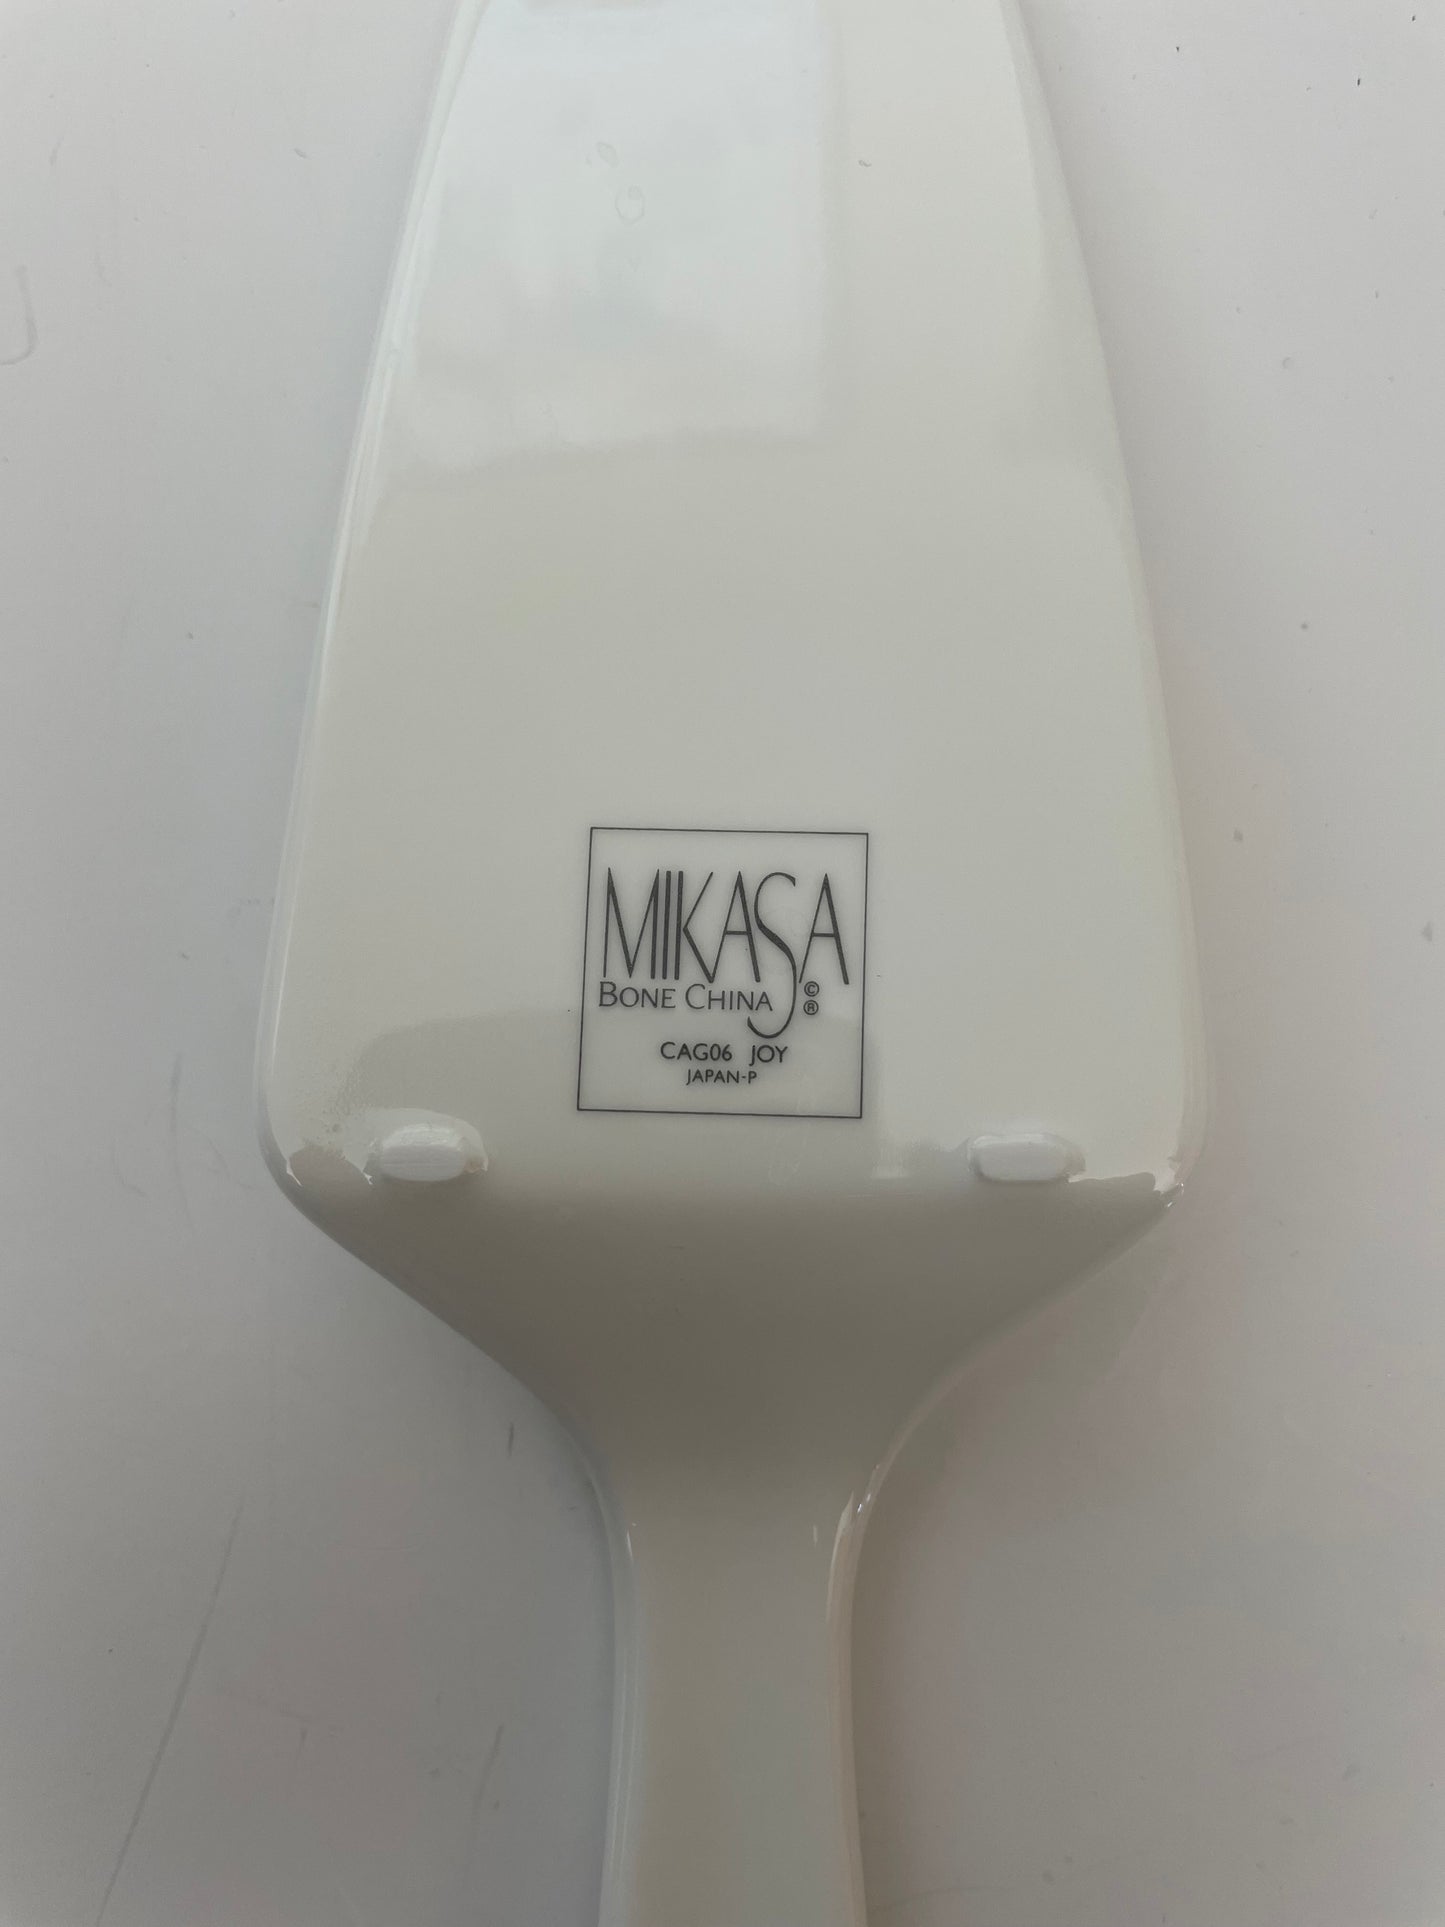 Mikasa Bone China Cake Server CAG06 Joy